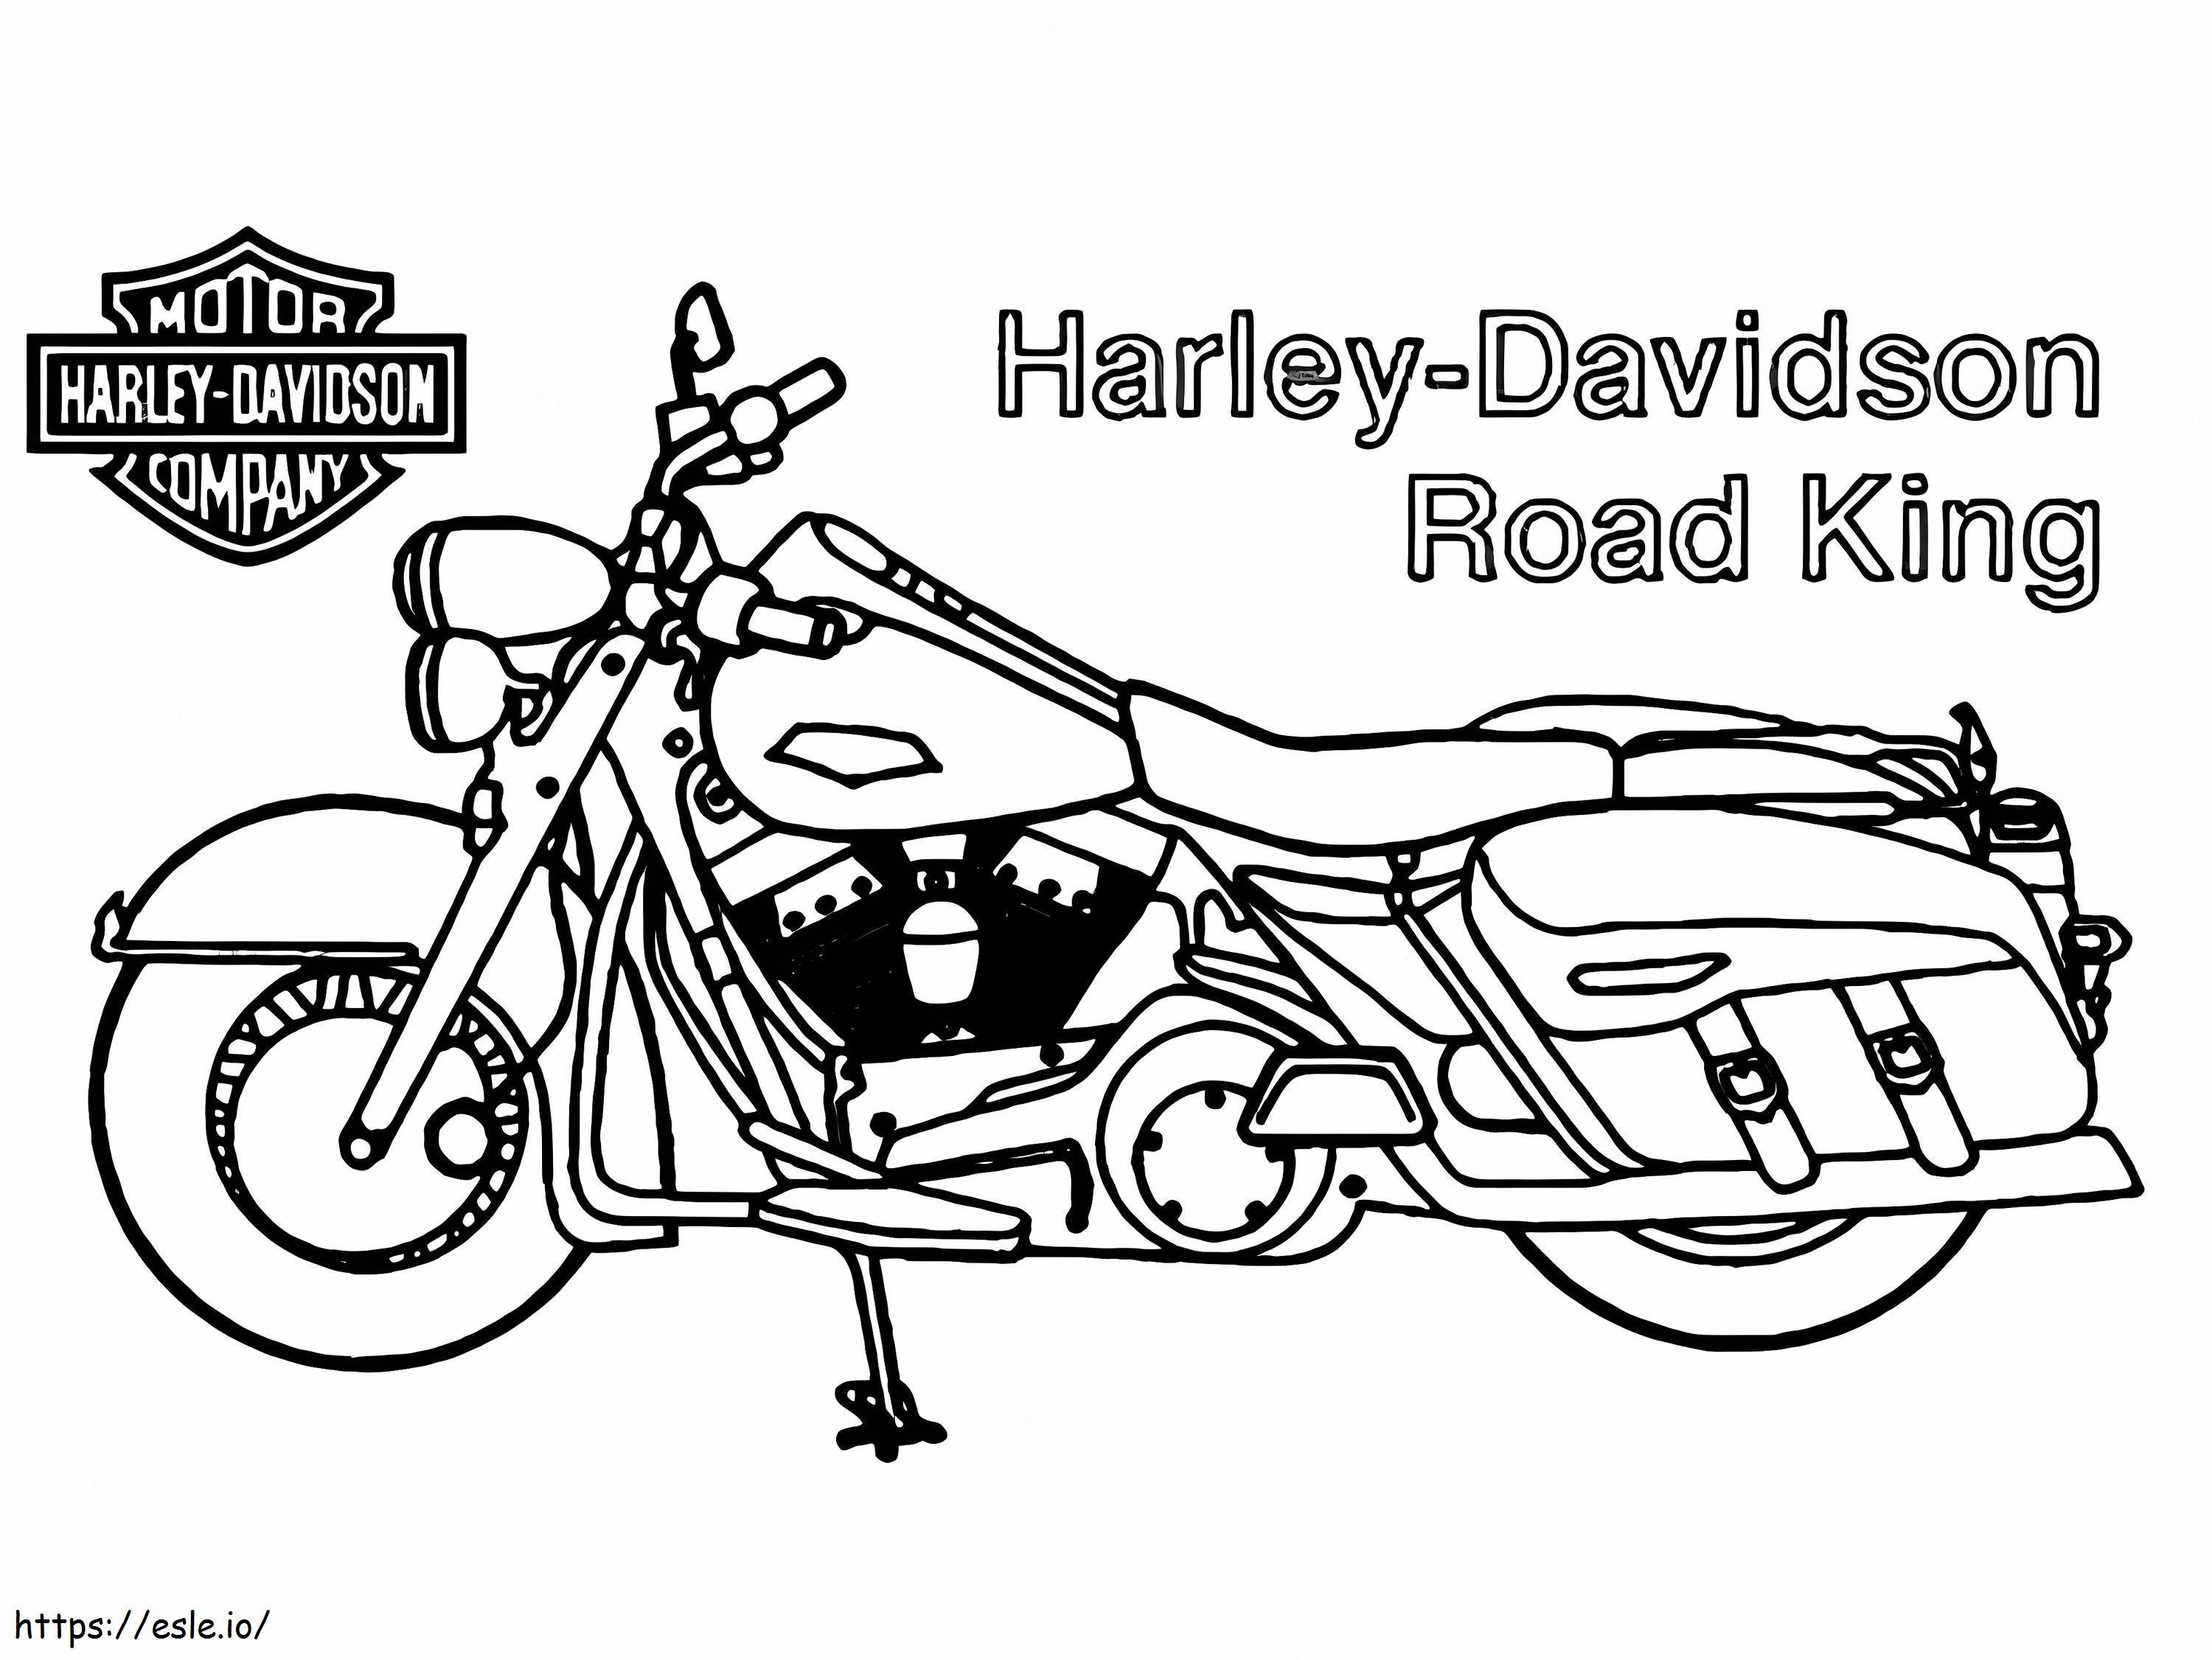 Harley Davidson Road King 1 da colorare